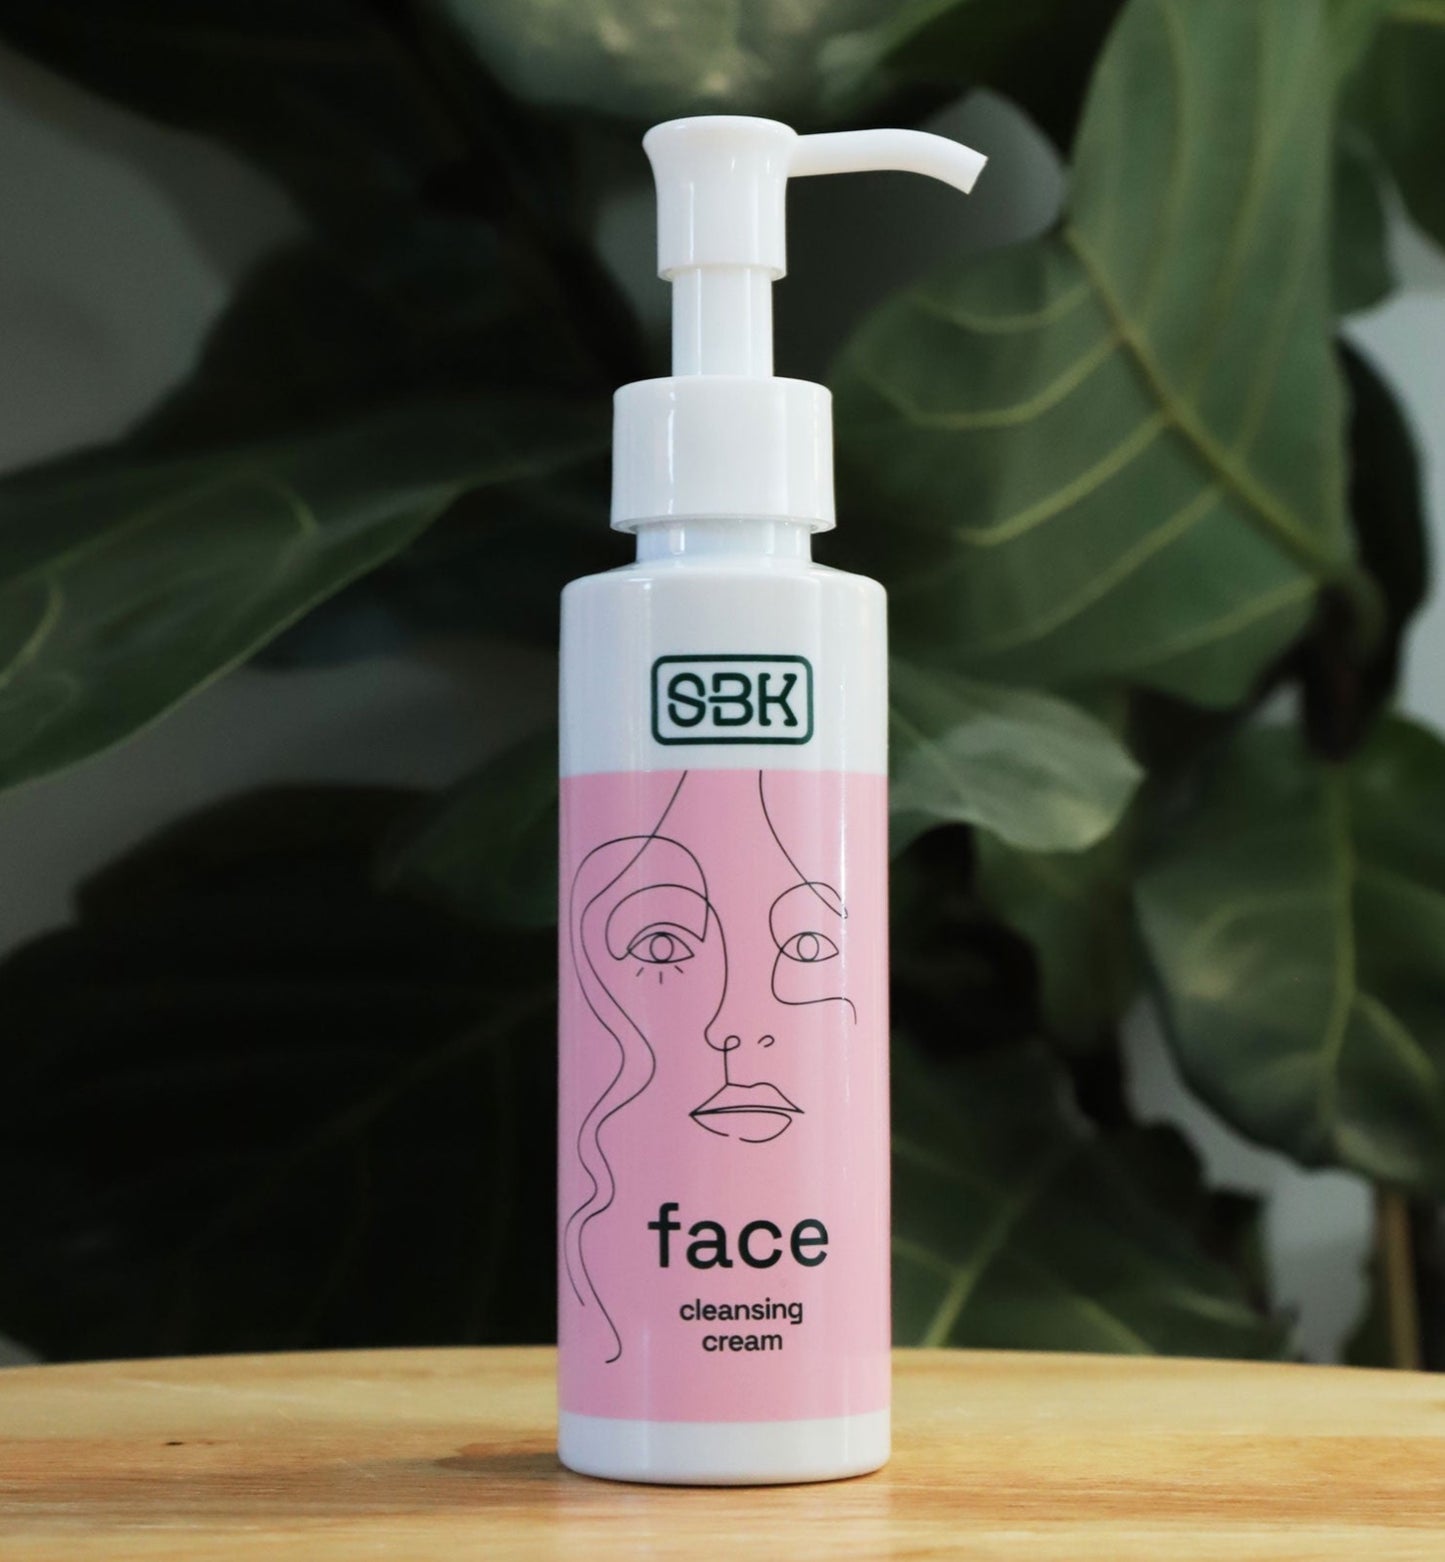 face cleansing cream